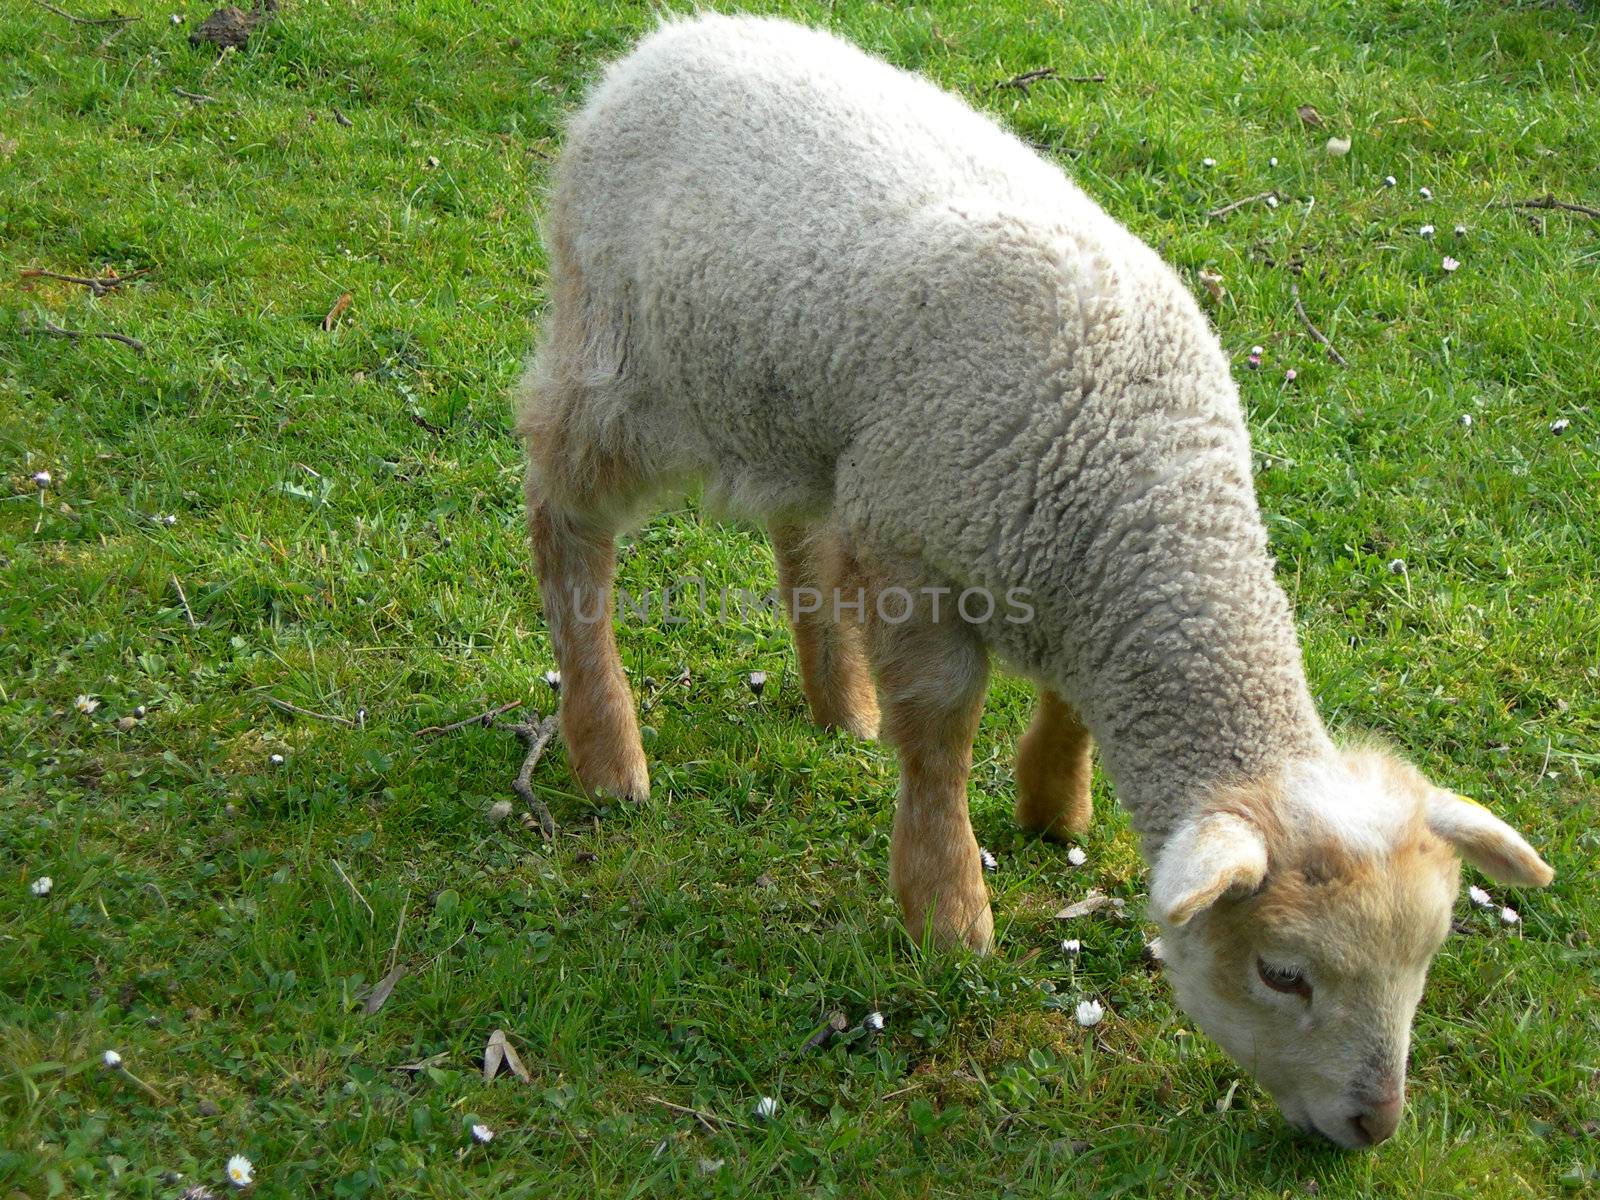 Lamb on the grass by drakodav